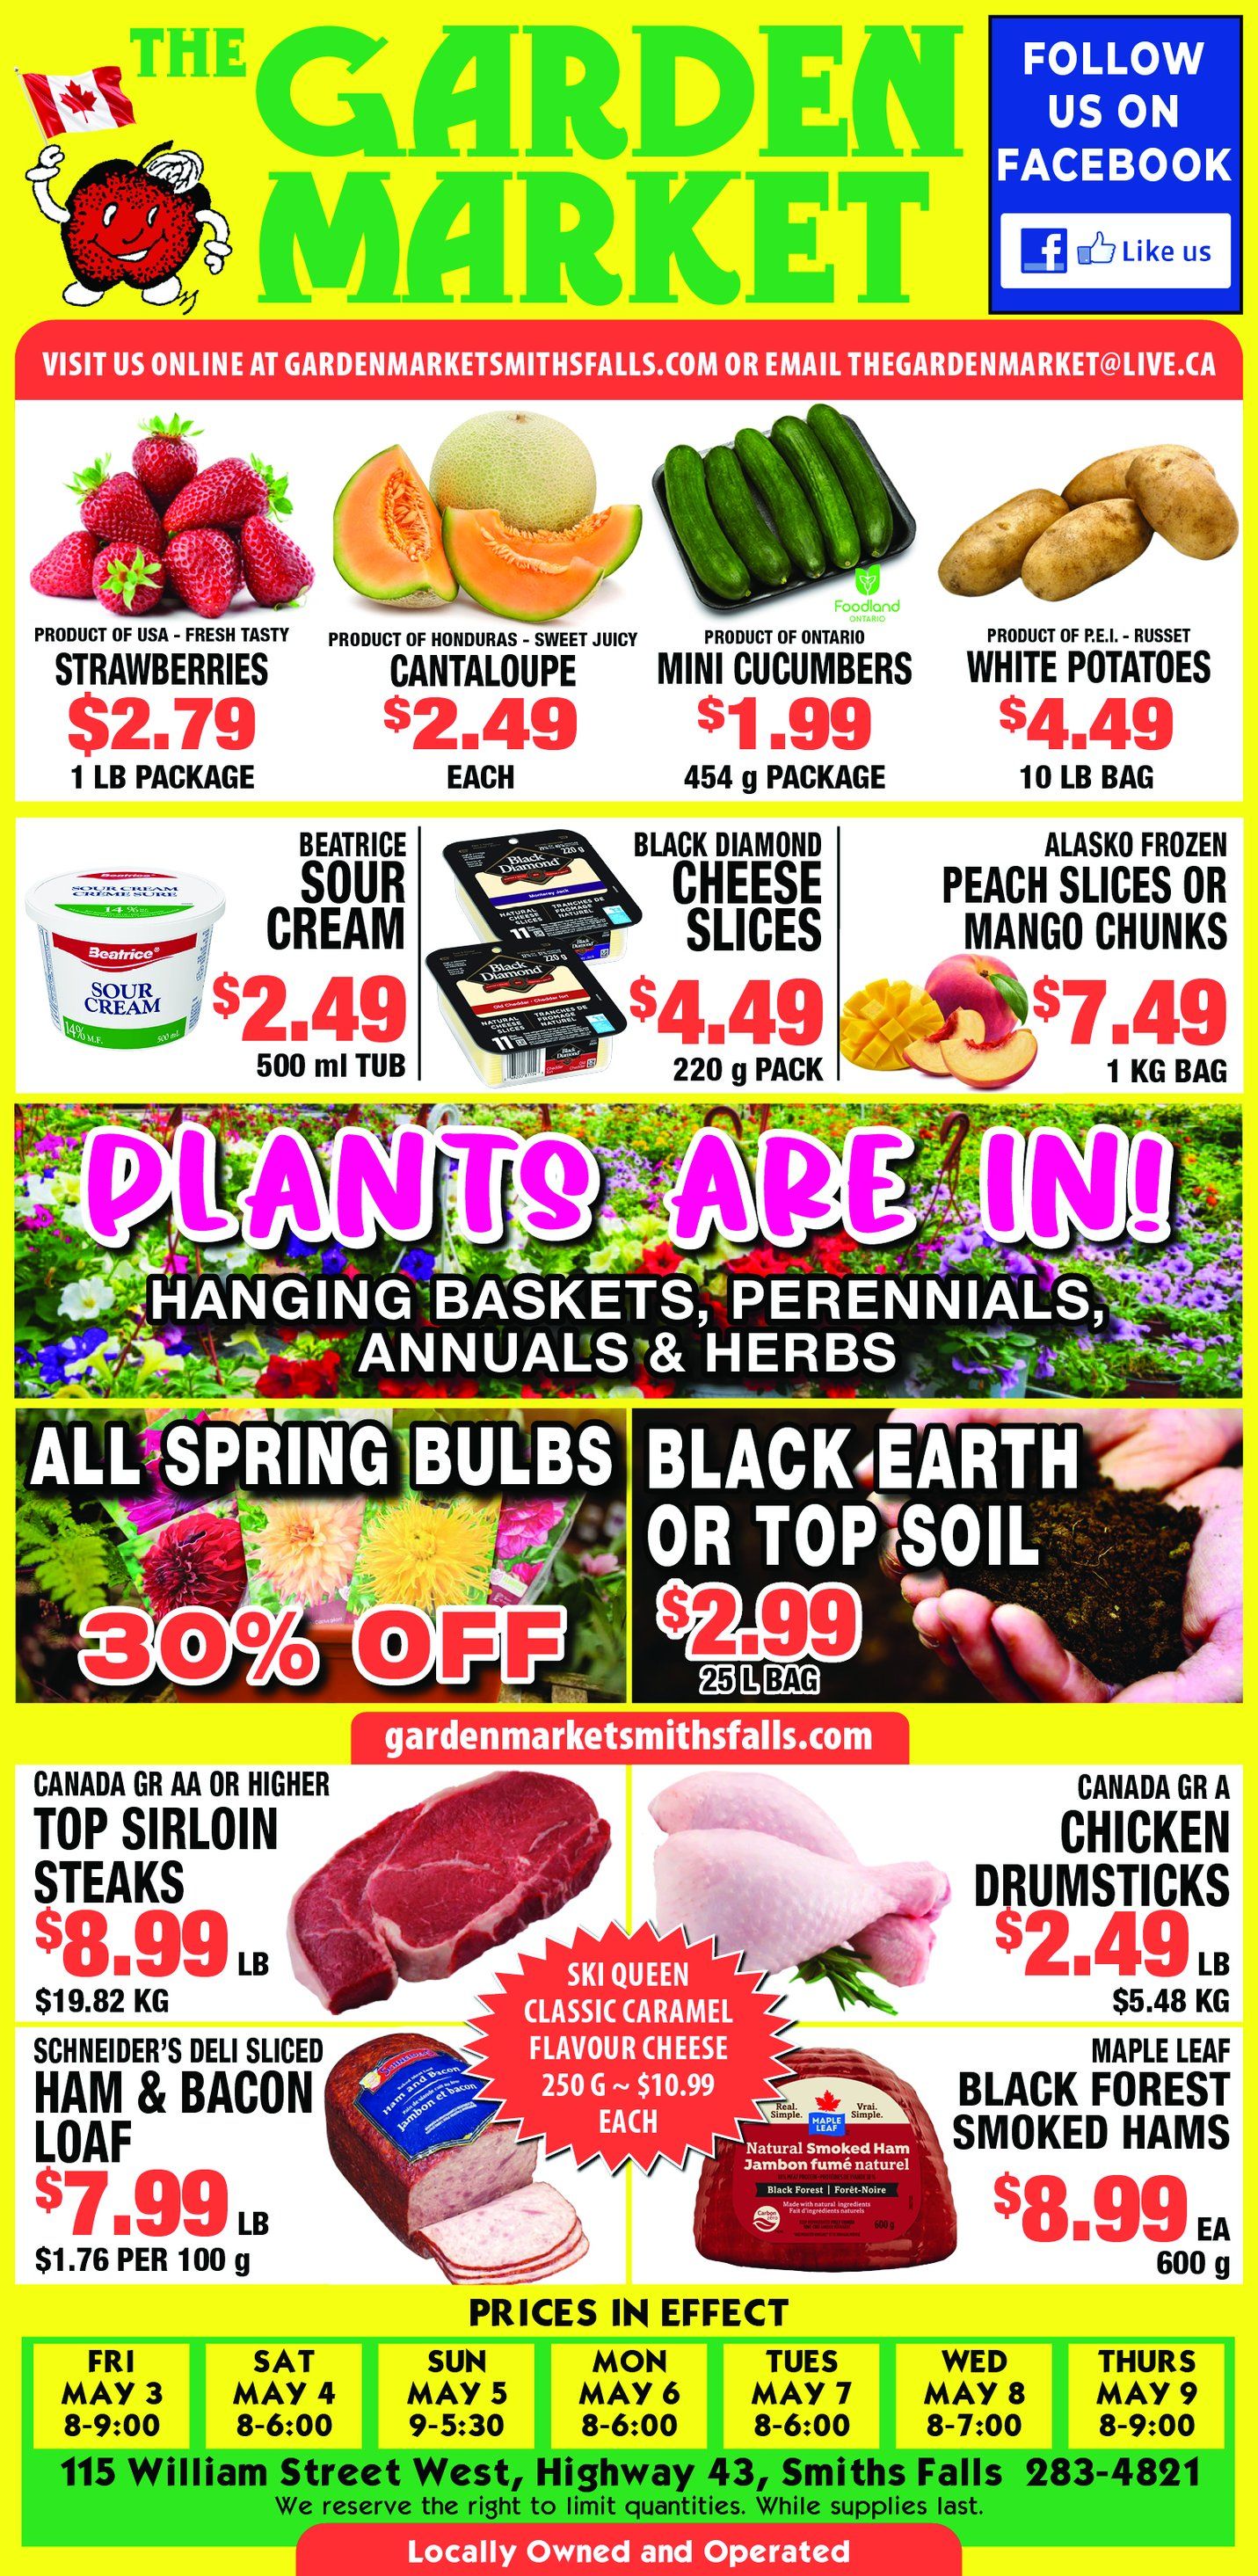 The Garden Market - Weekly Flyer Specials